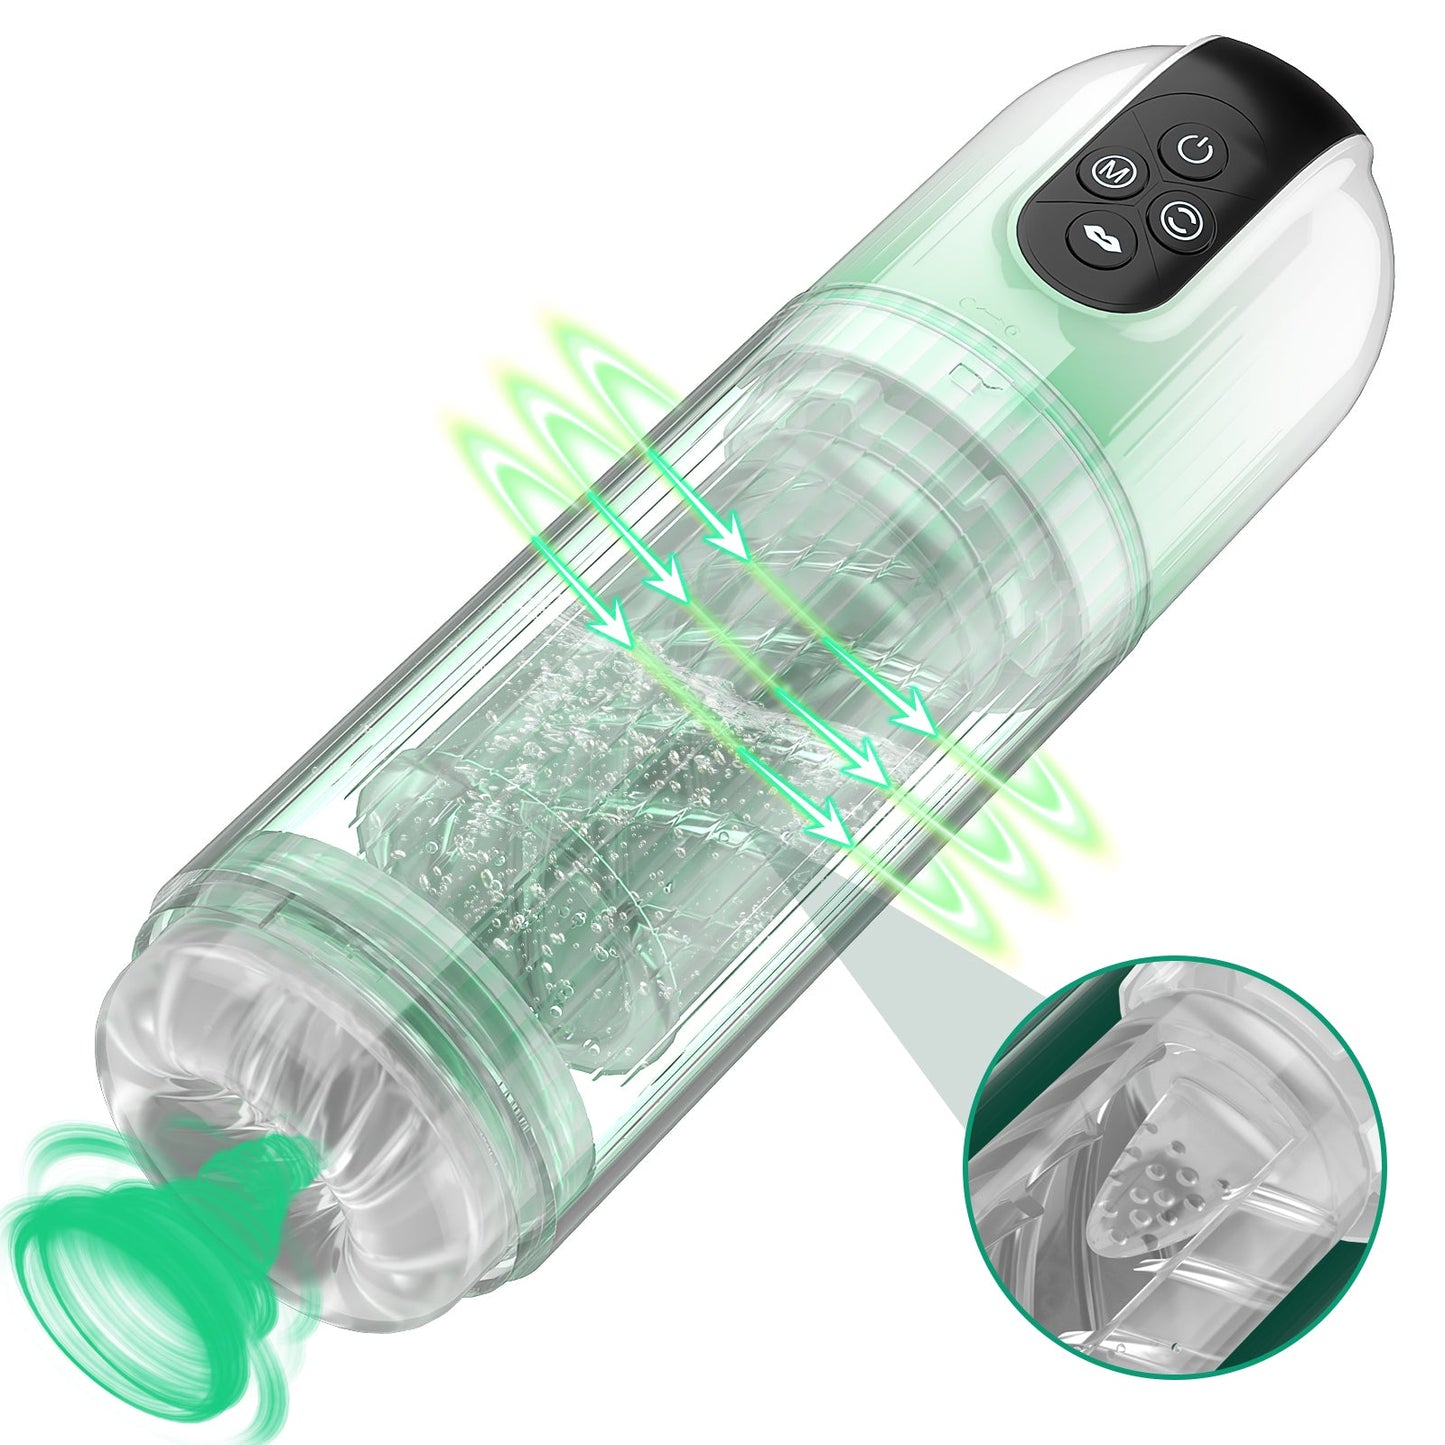 WeDol 7 Rotating & Vacuum Suction Oral Sex Automatic Male Masturbator Cup